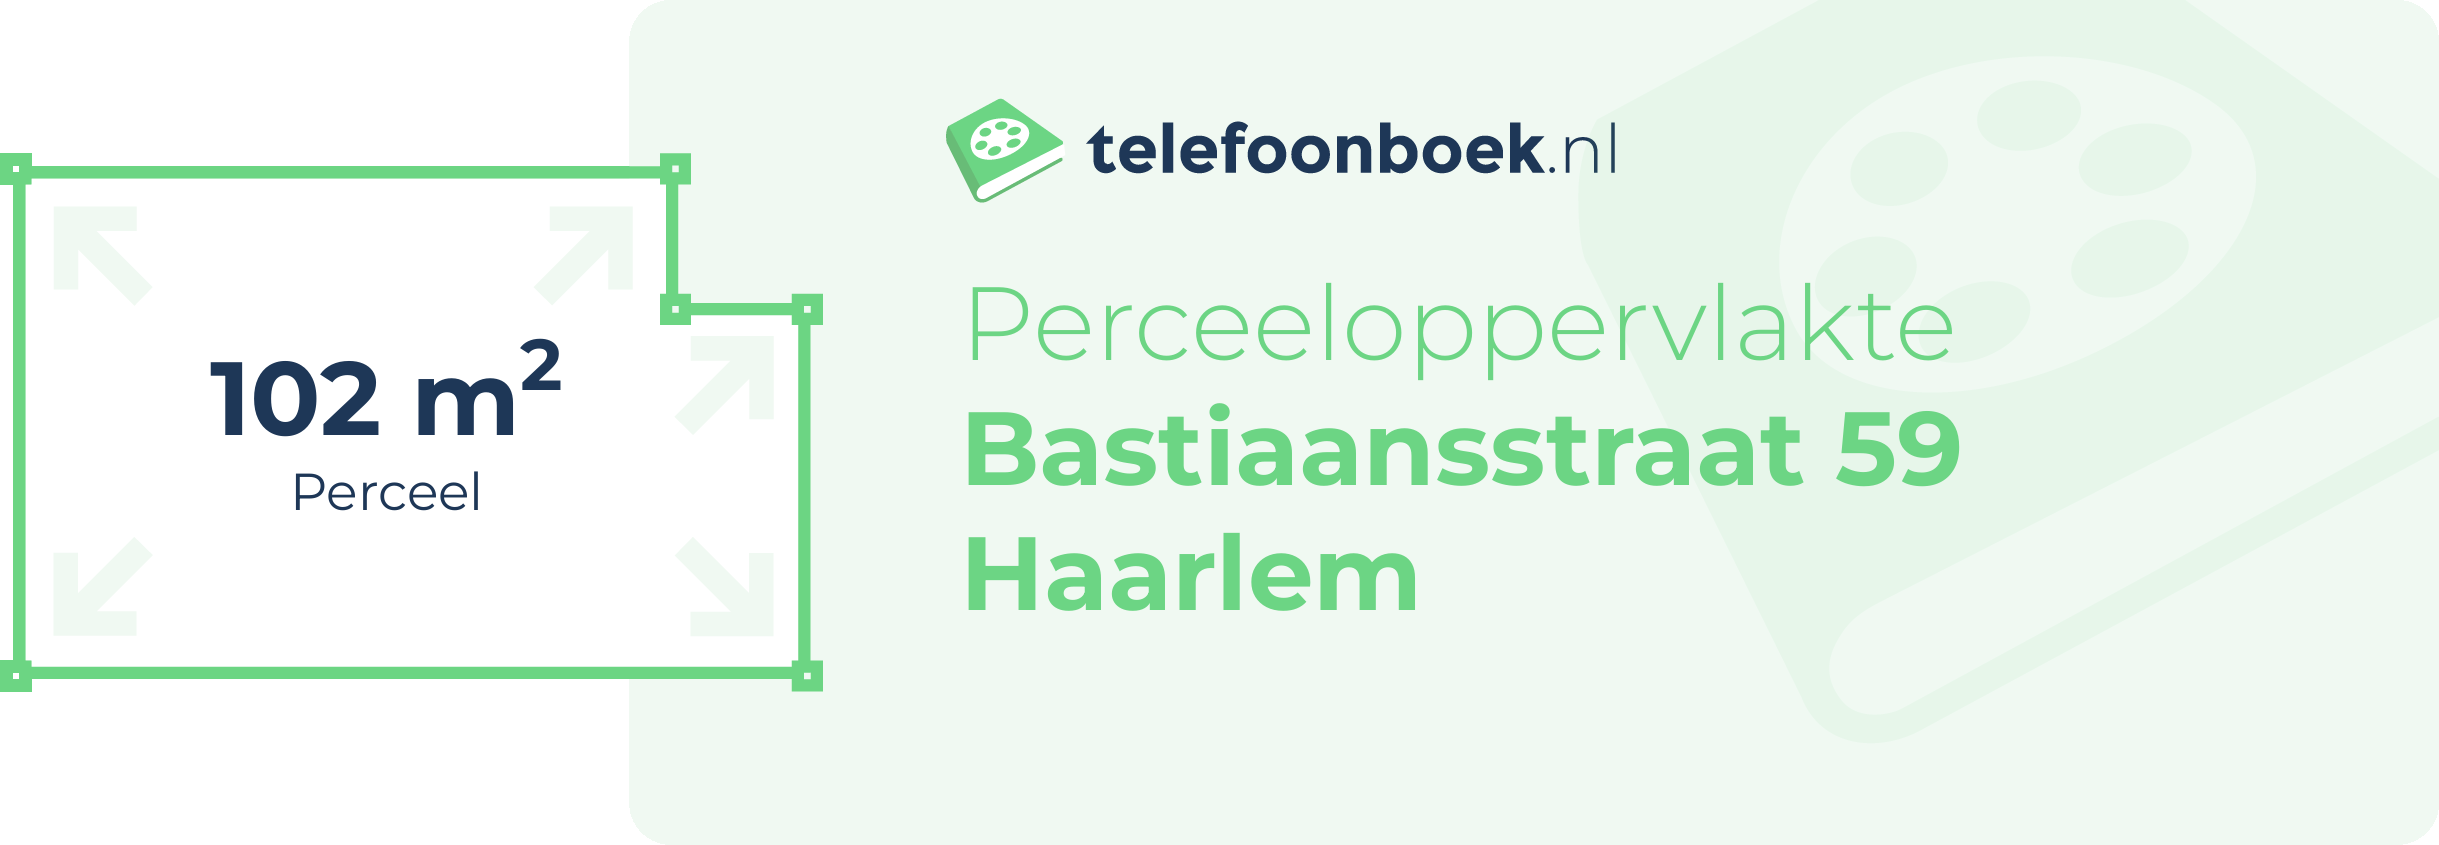 Perceeloppervlakte Bastiaansstraat 59 Haarlem